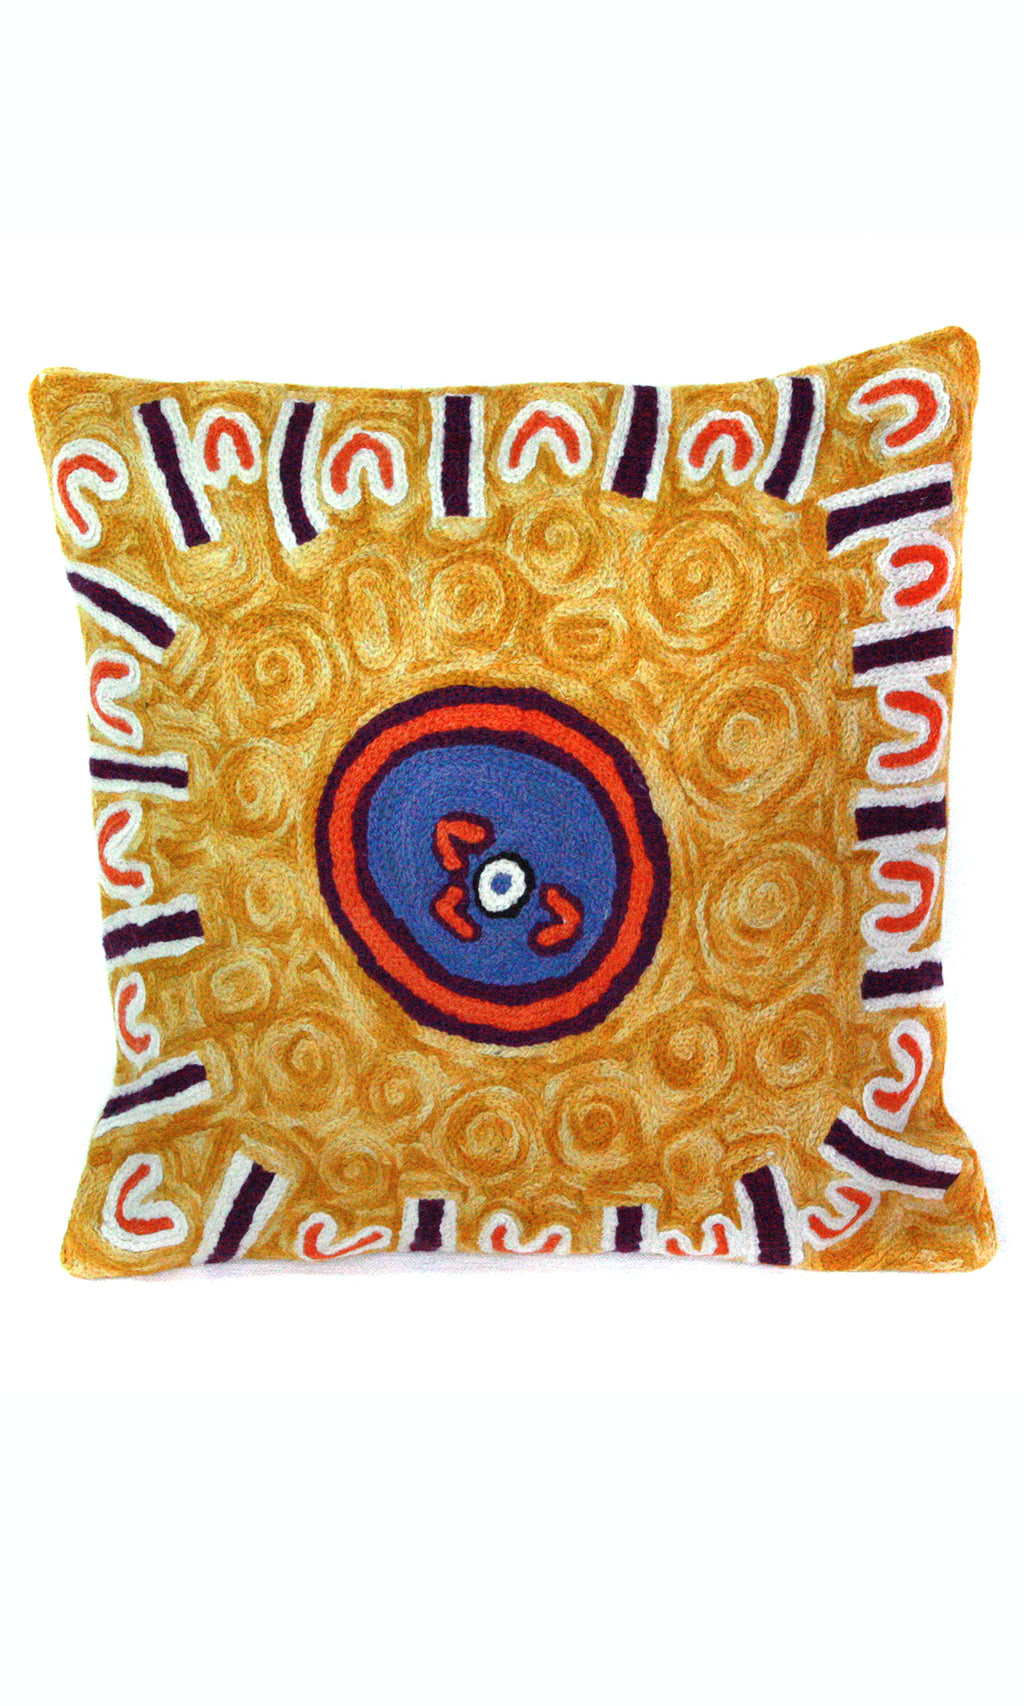 Aboriginal Art Cushion Cover by Rama Kaltu Kaltu Sampson (2)